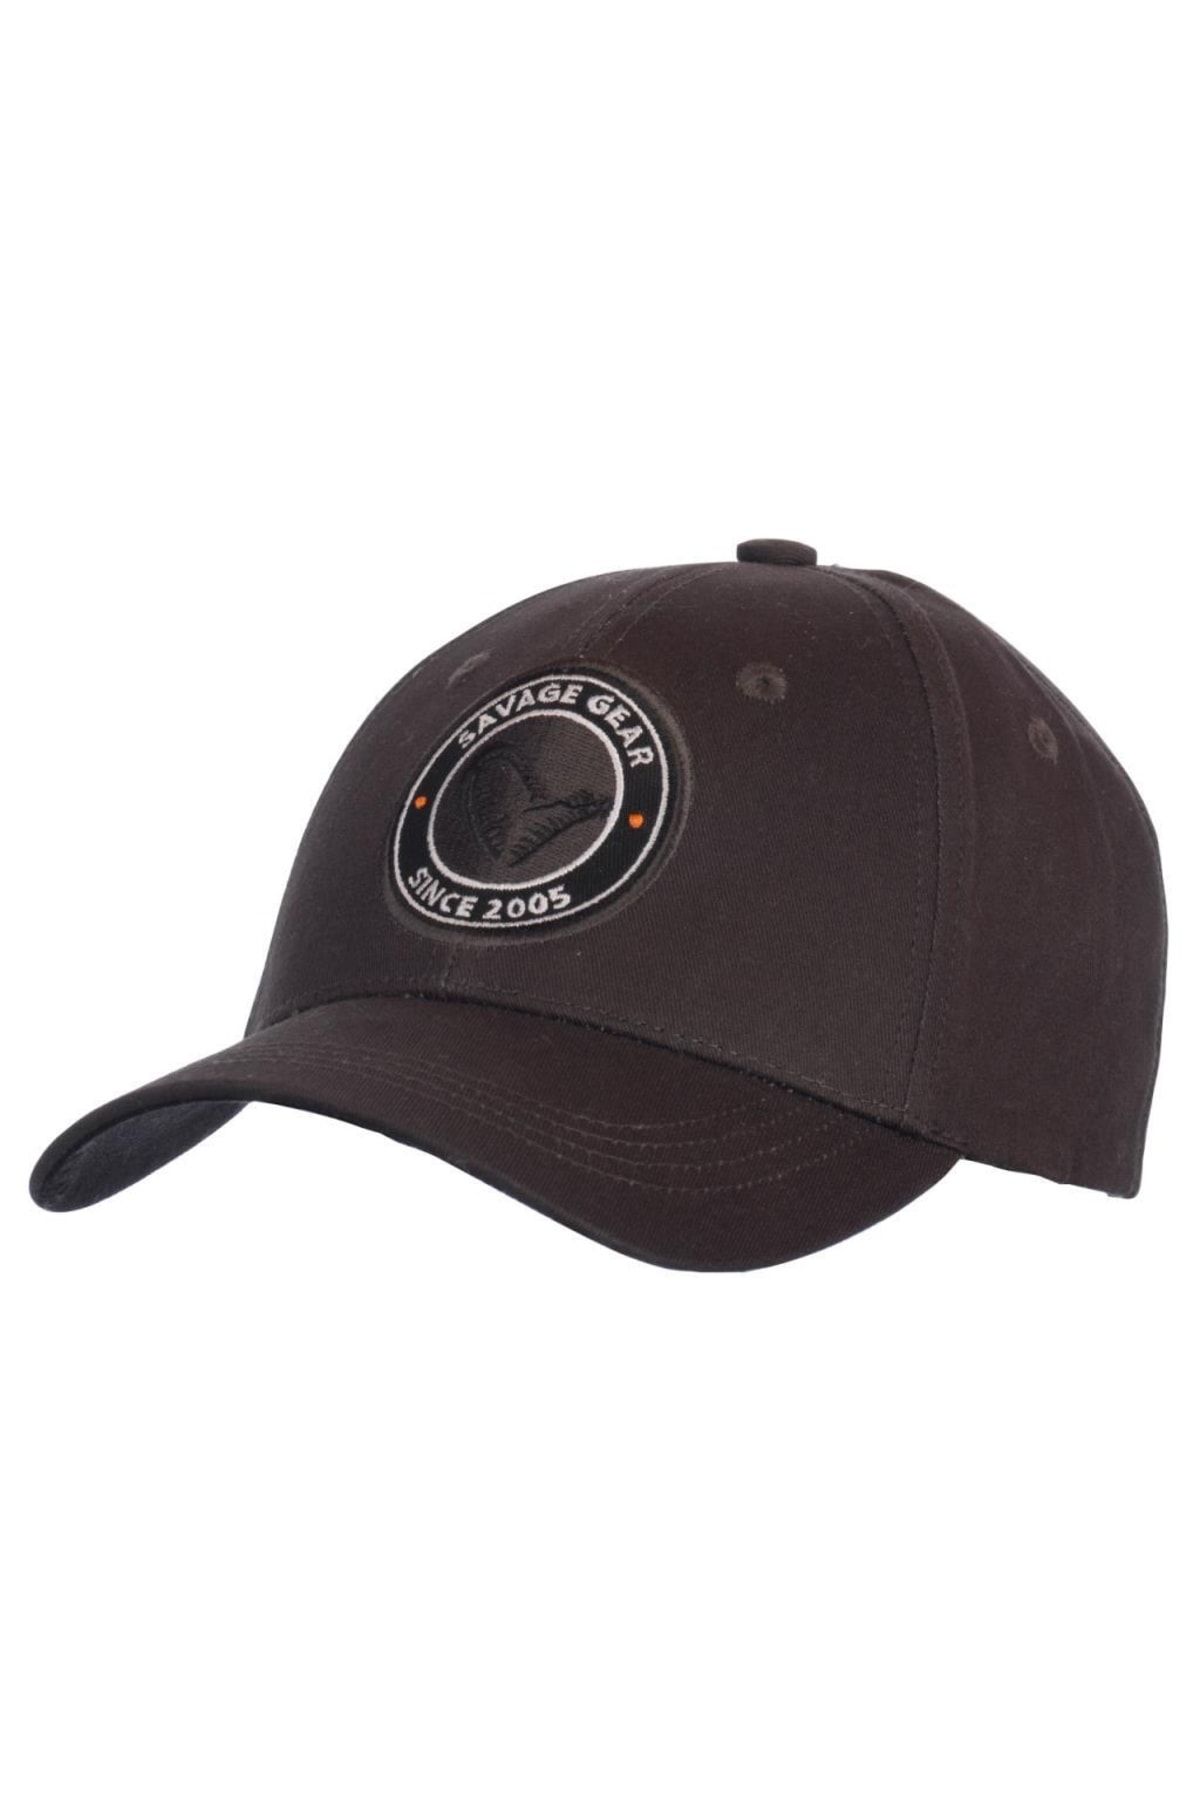 Savage Gear Badge Cap - Şapka